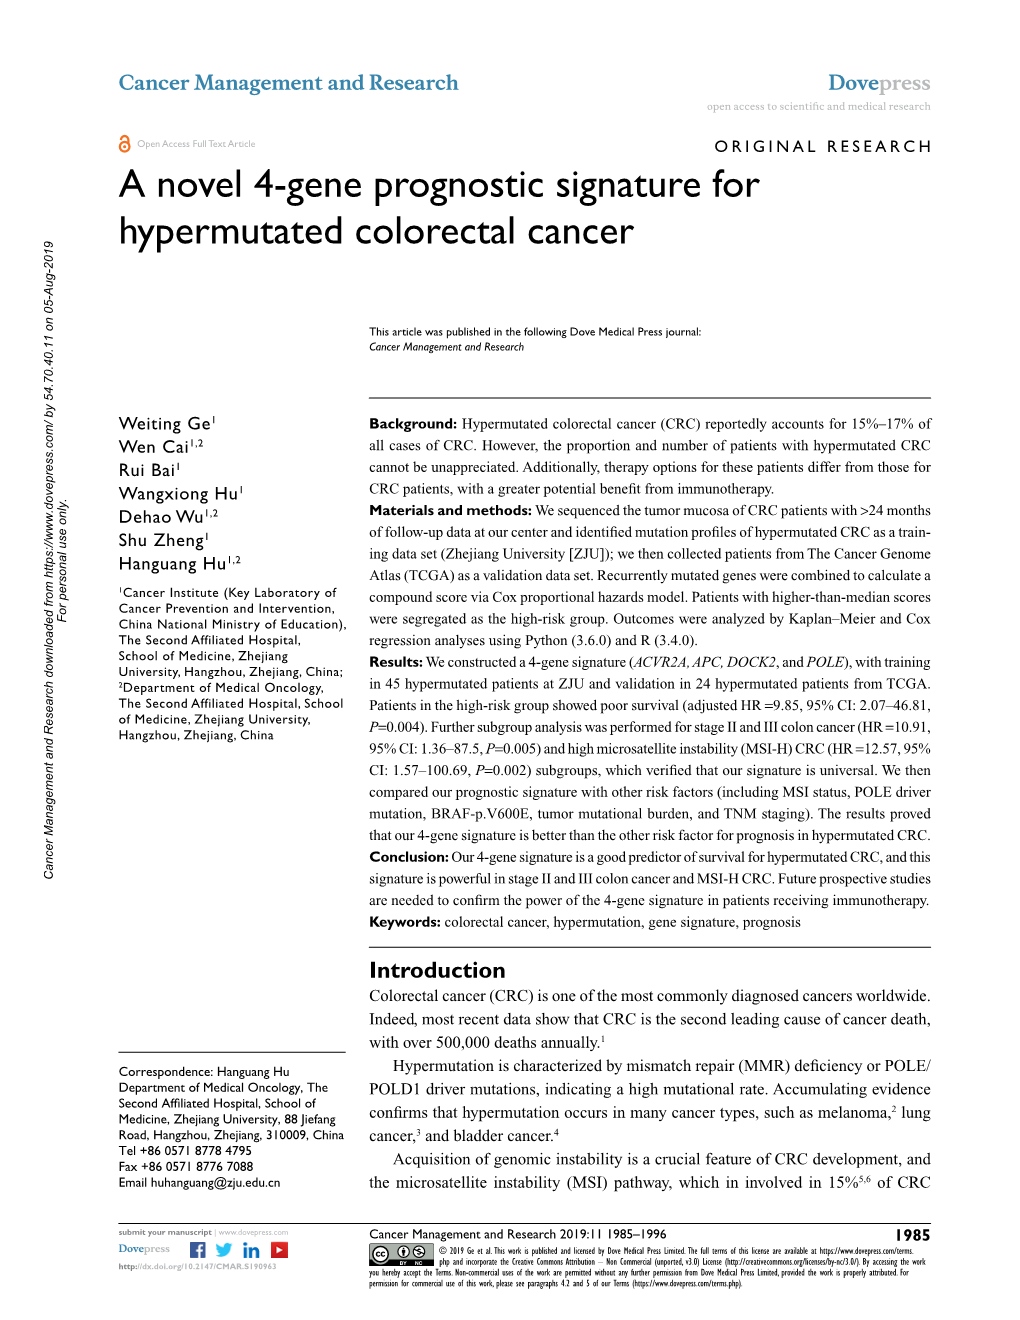 A Novel 4-Gene Prognostic Signature for Hypermutated Colorectal Cancer